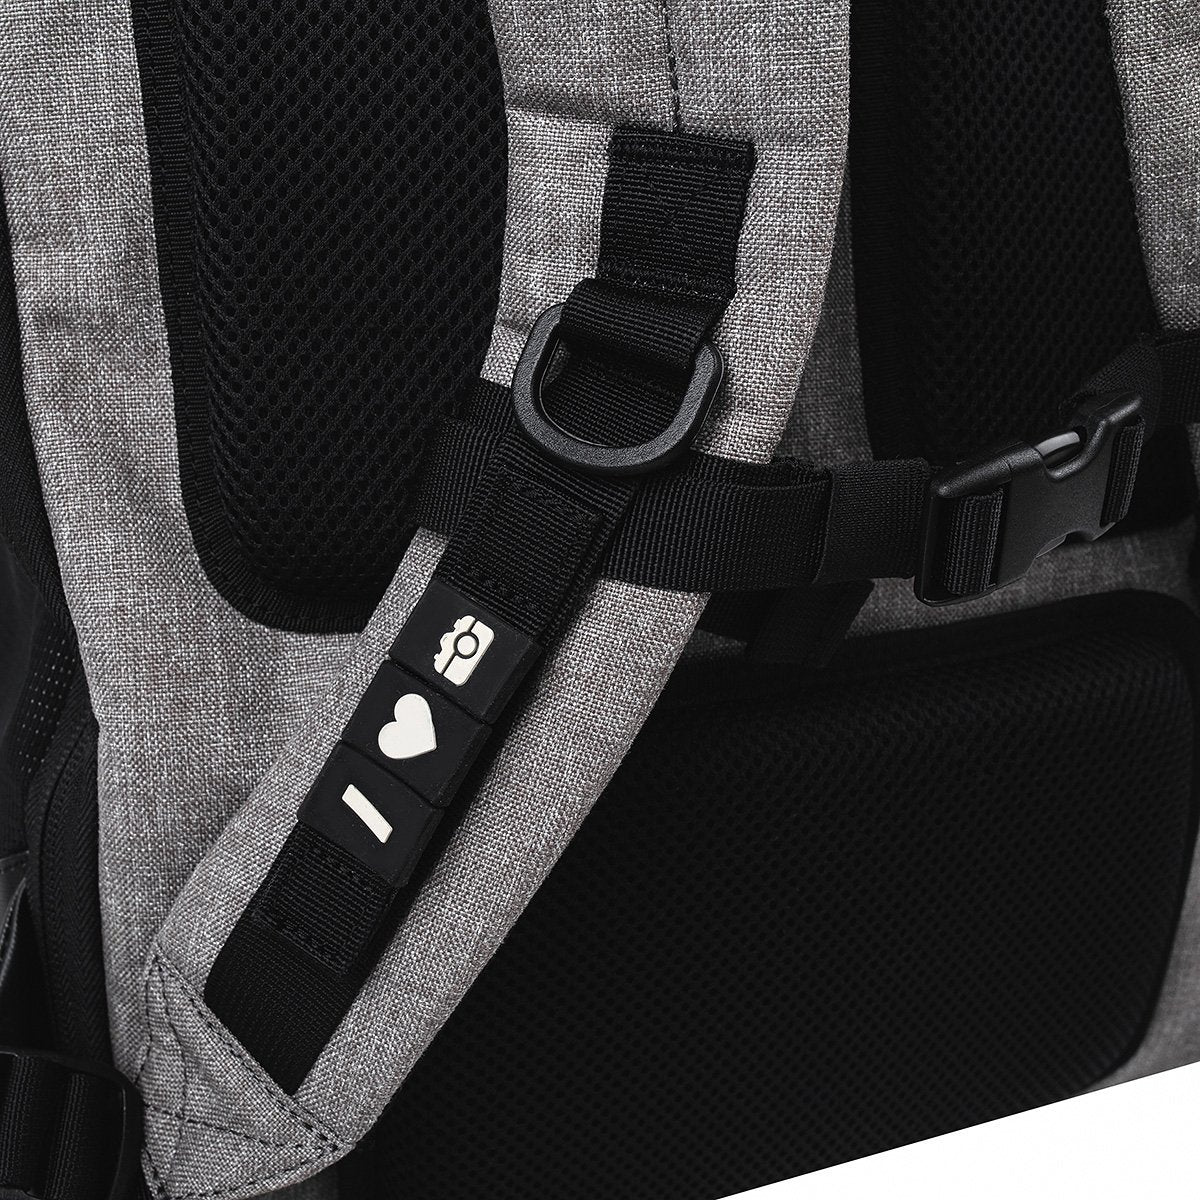 Crumpler Creator's Road Mentor Backpack - #product-type#